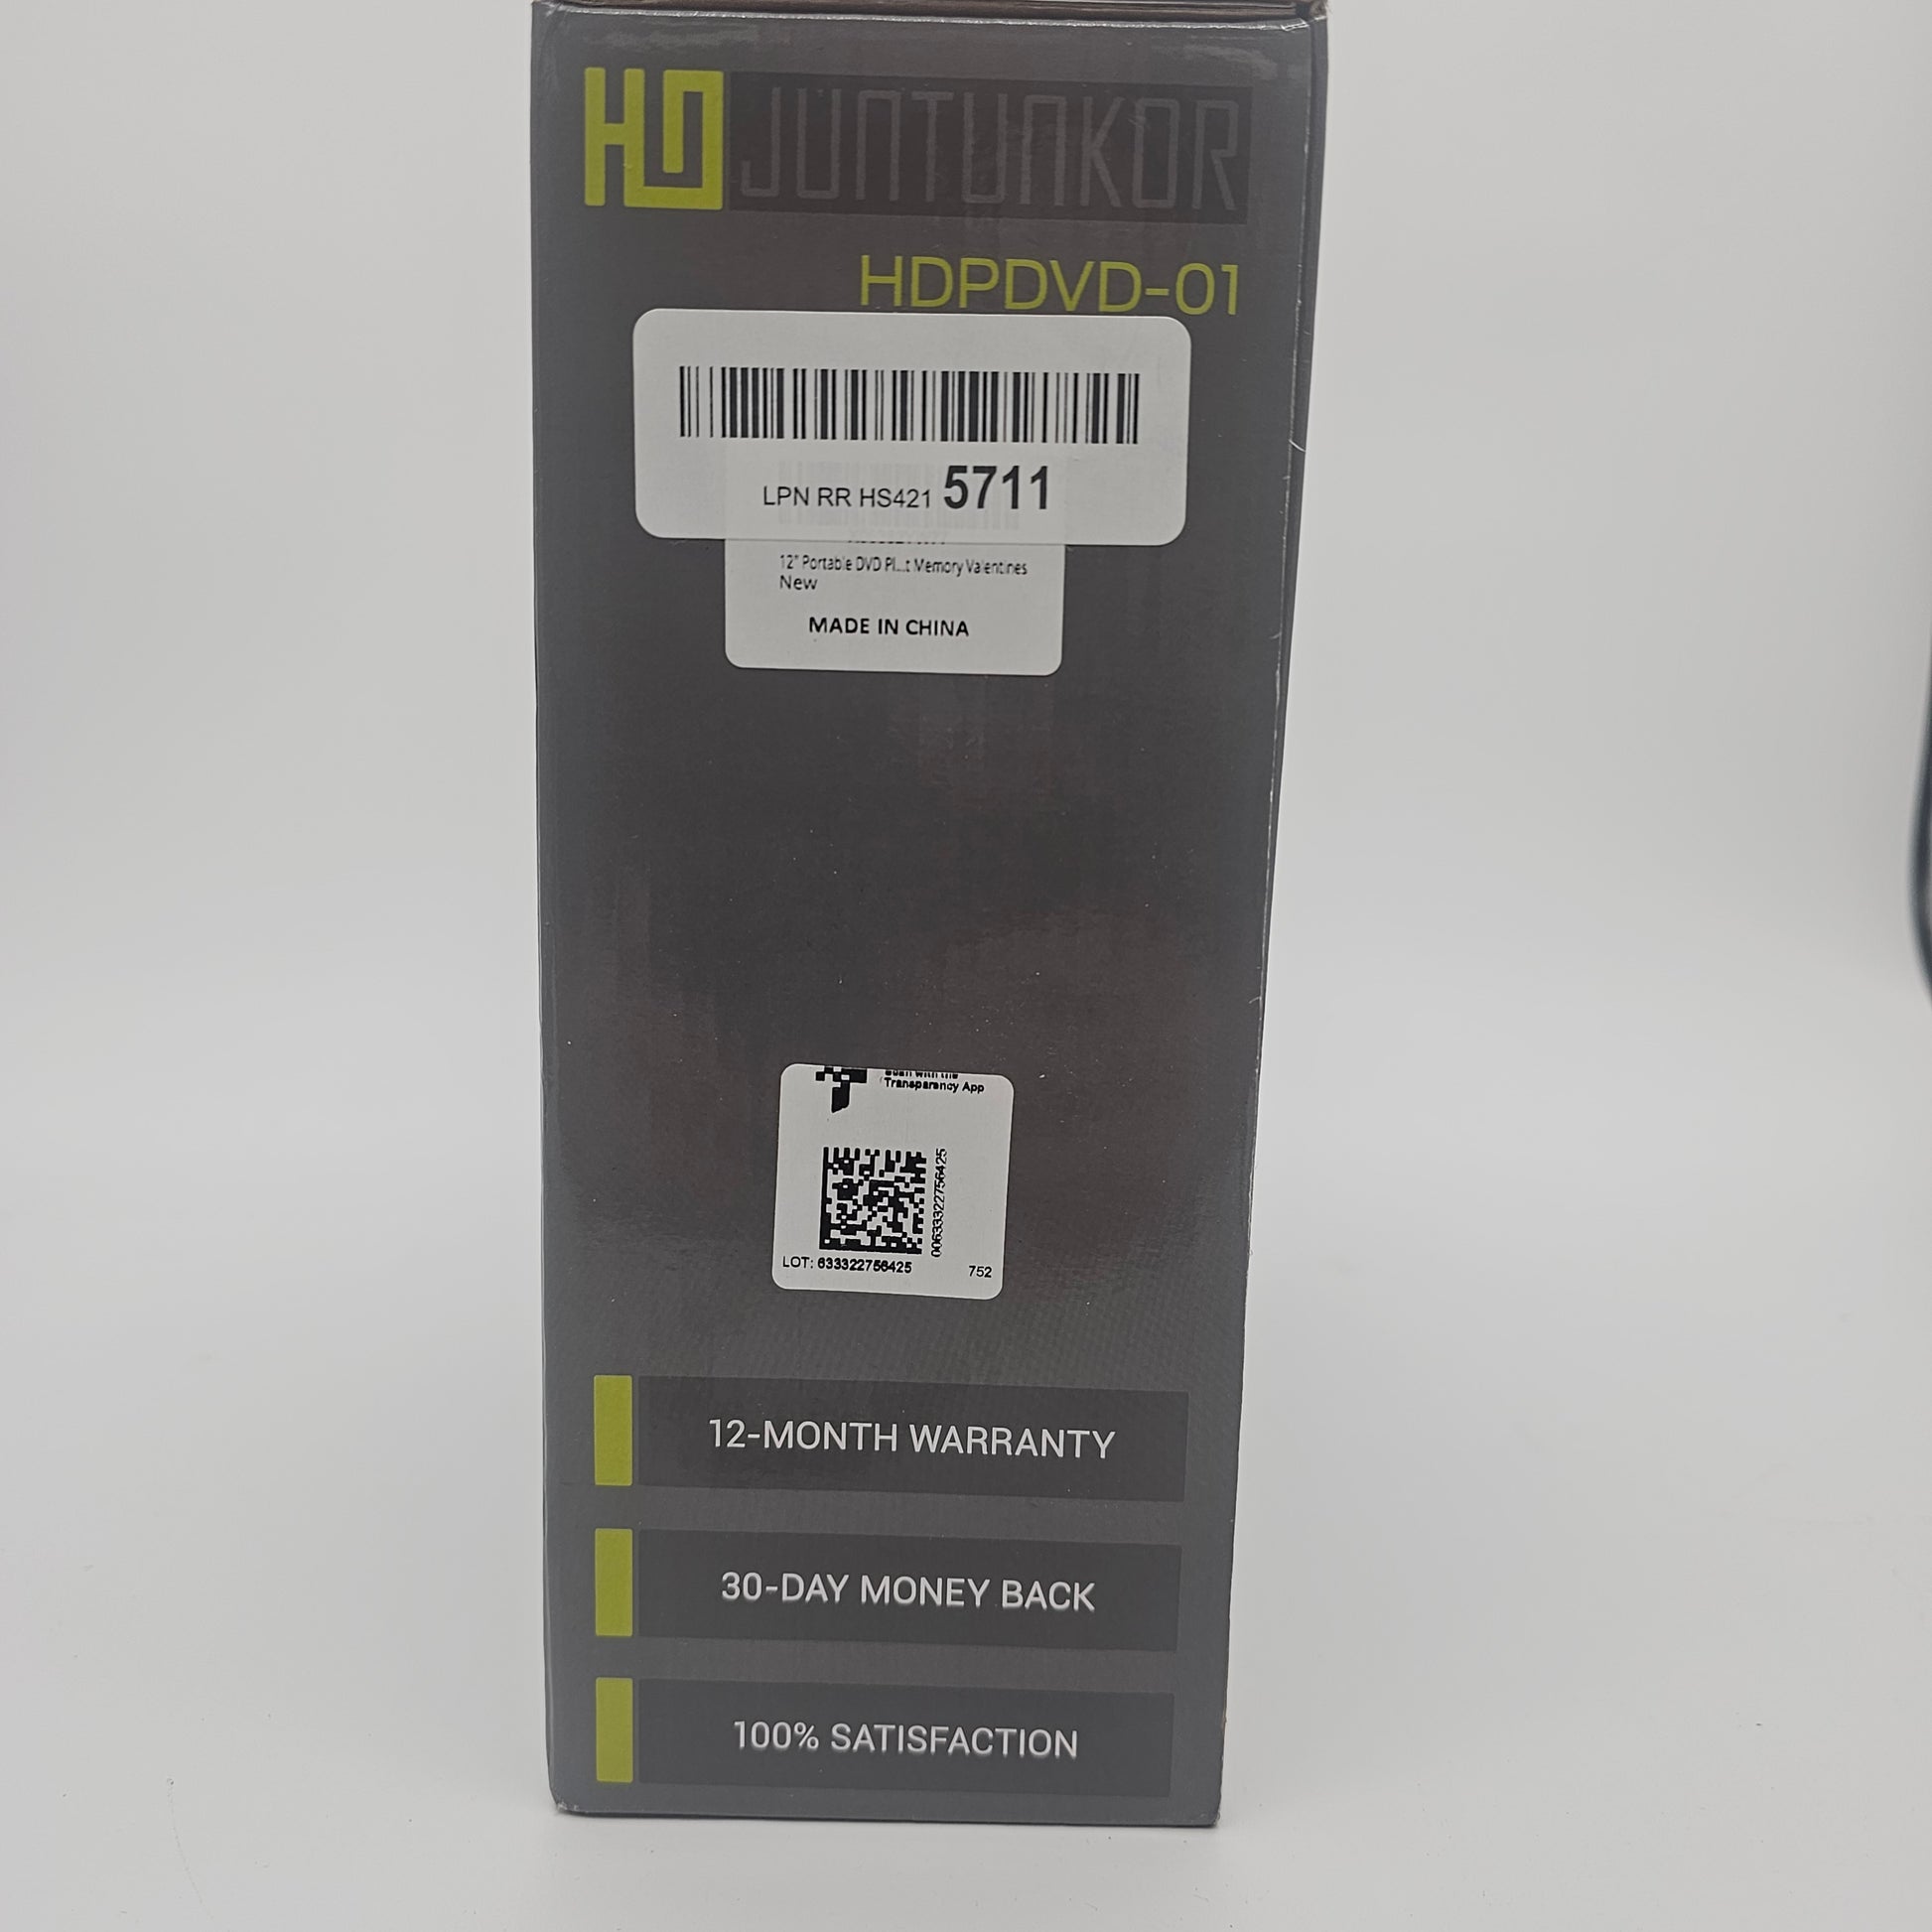 10.1" Portable DVD Player HdJuntunkor HPDVD-01 - DQ Distribution